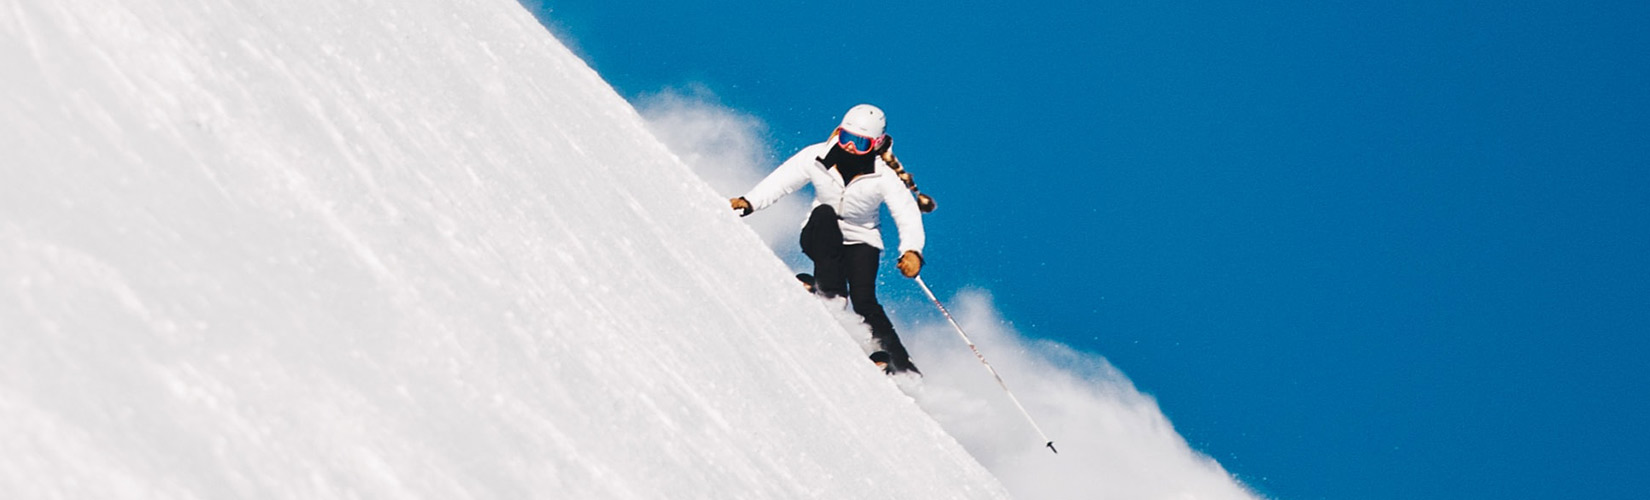 Woman in white jacket skiing; Photo by Nicolai Berntsen on Unsplash